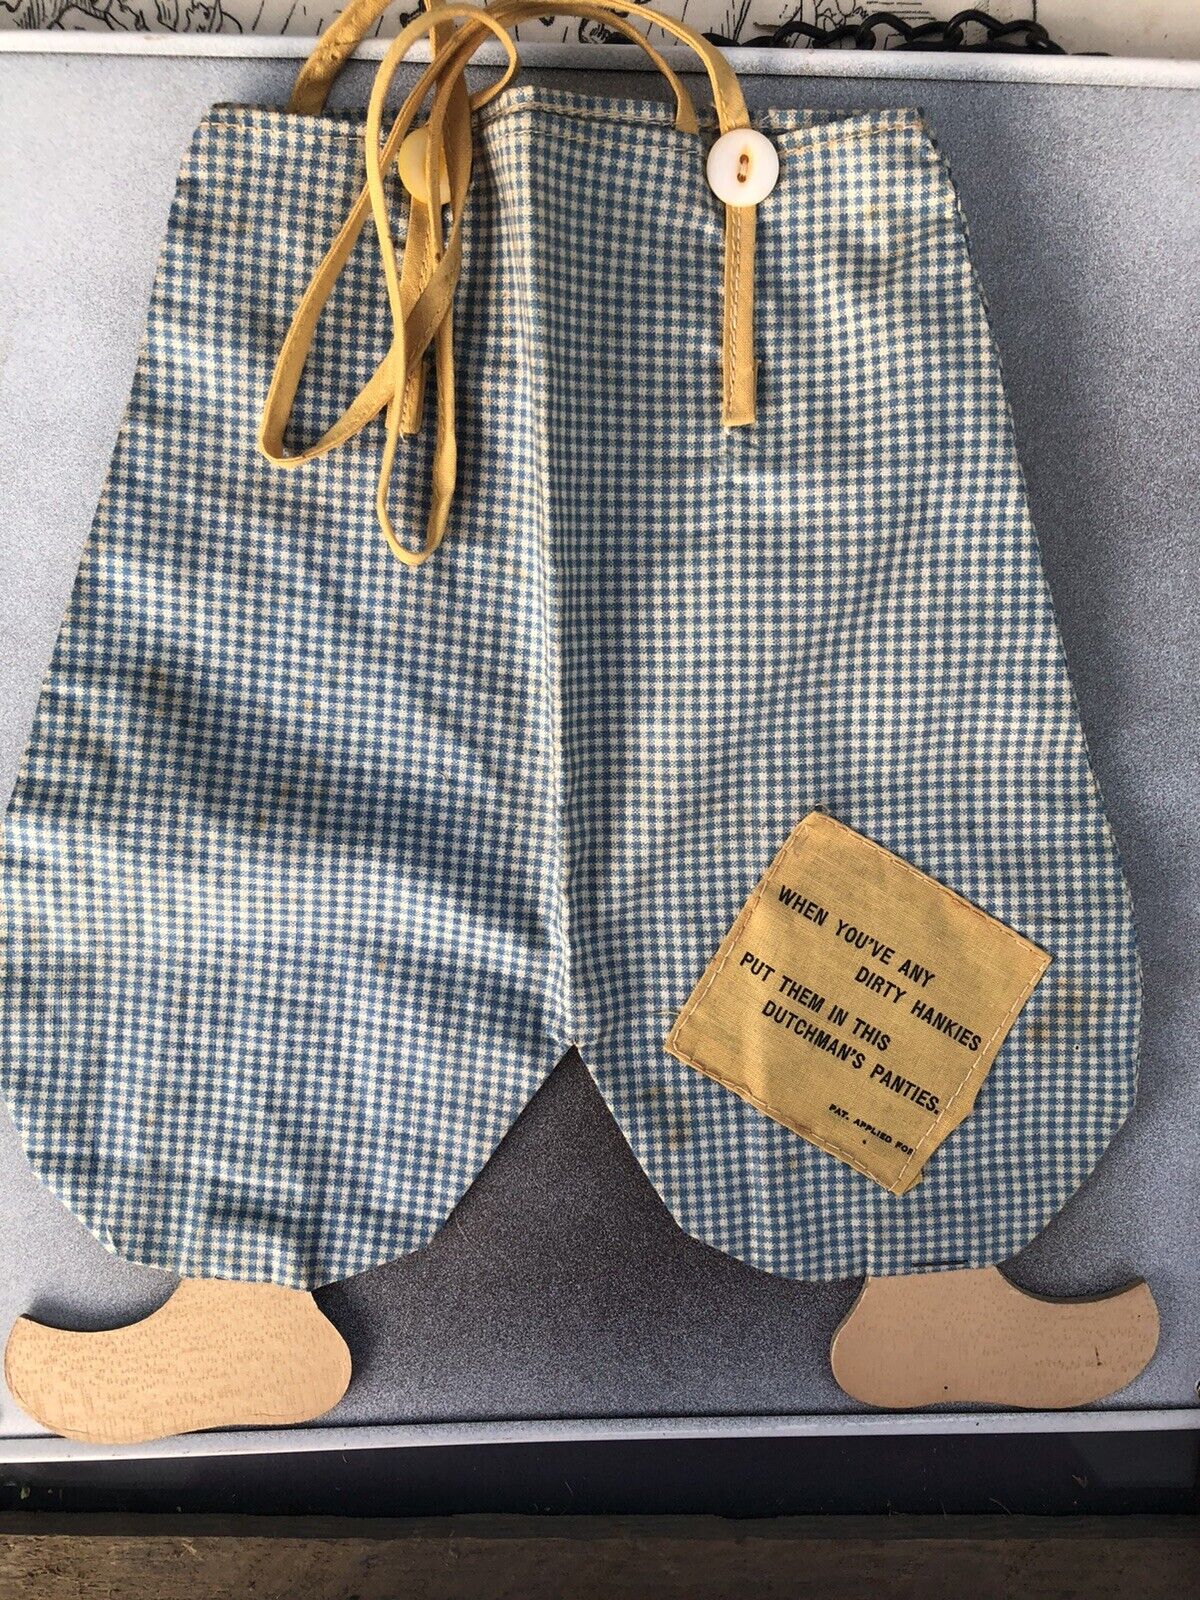 Vintage Dutchmans Pants- Dirty Hanky Bag